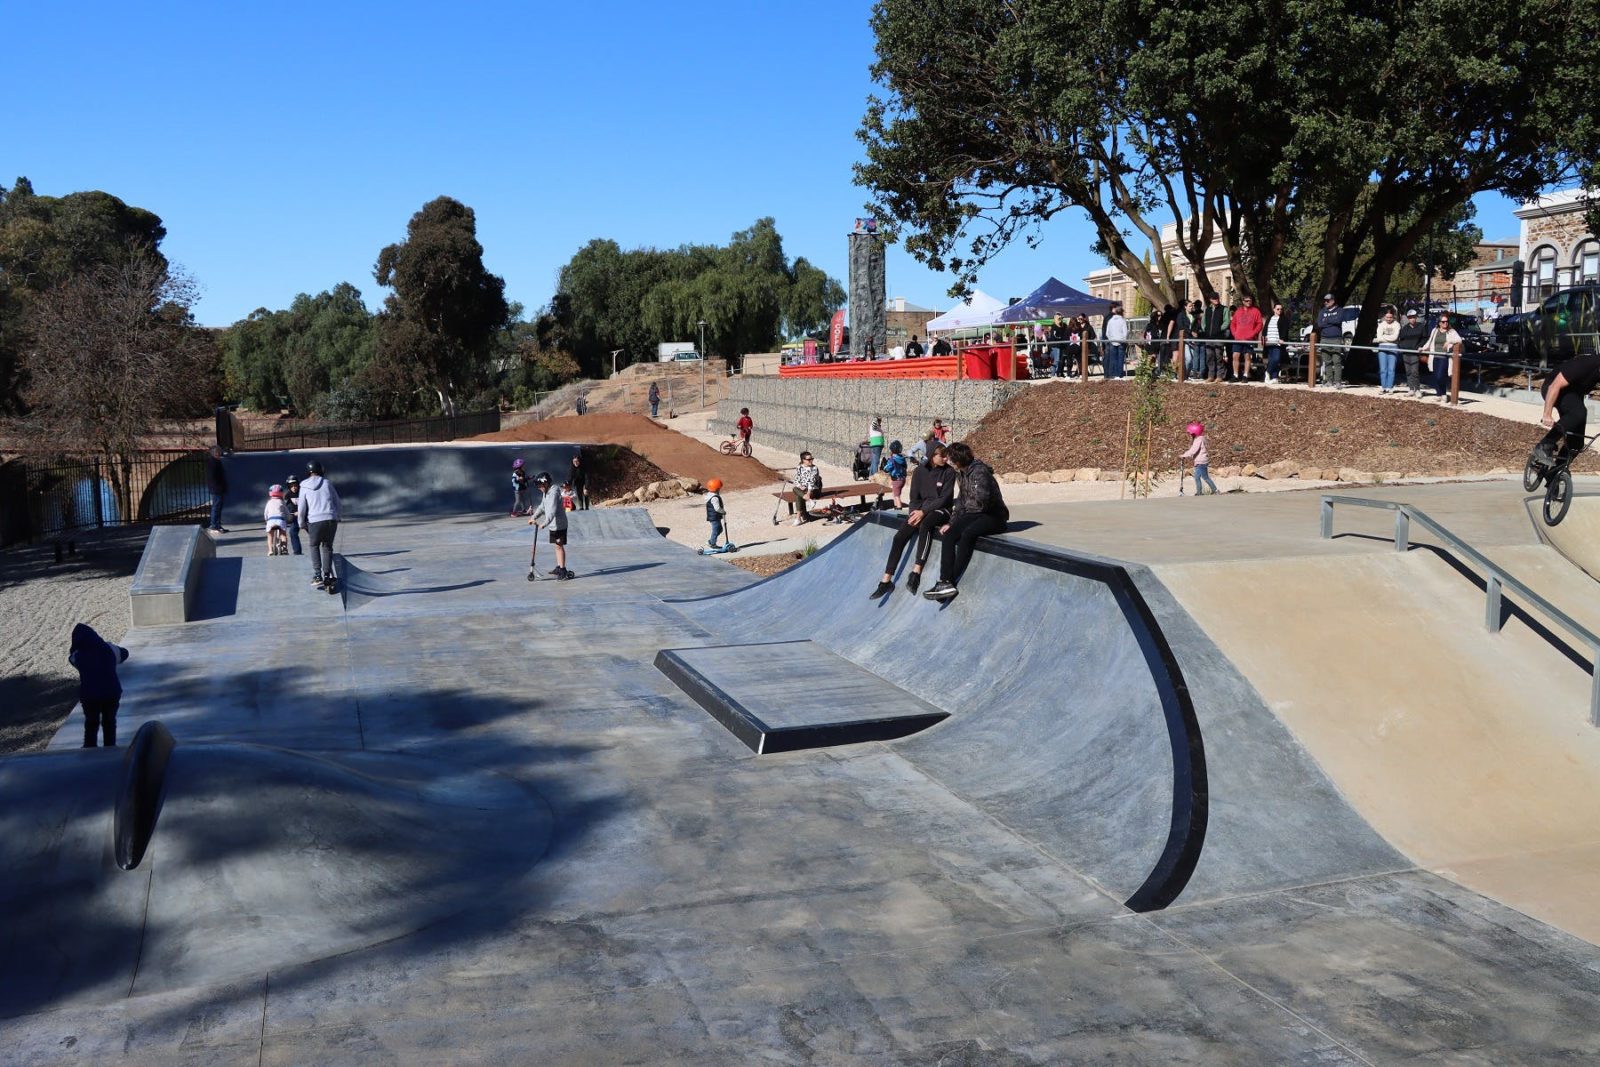 The Burra Skate Park